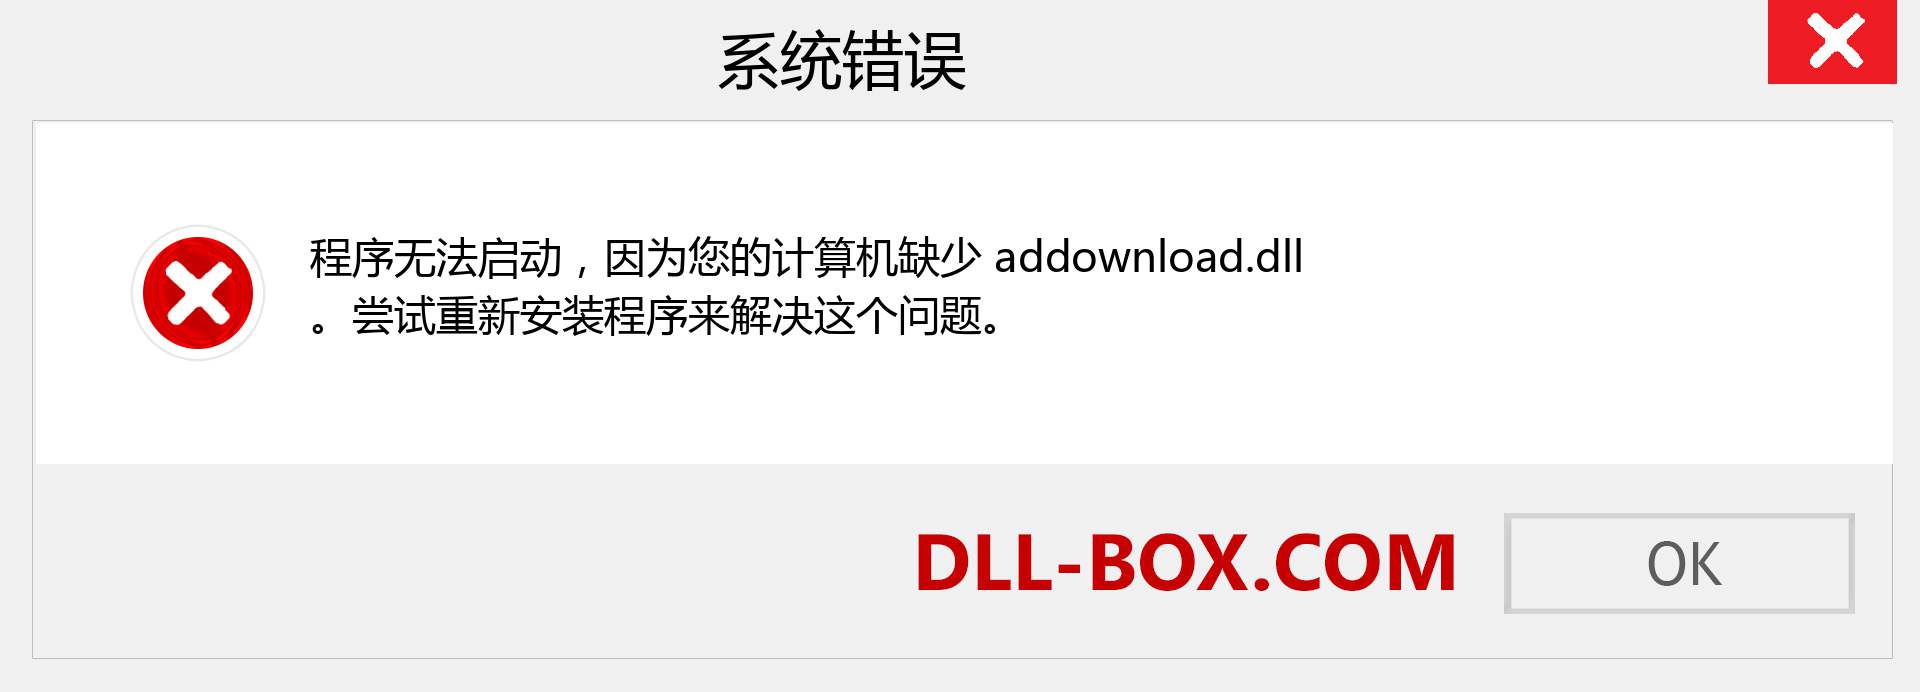 addownload.dll 文件丢失？。 适用于 Windows 7、8、10 的下载 - 修复 Windows、照片、图像上的 addownload dll 丢失错误